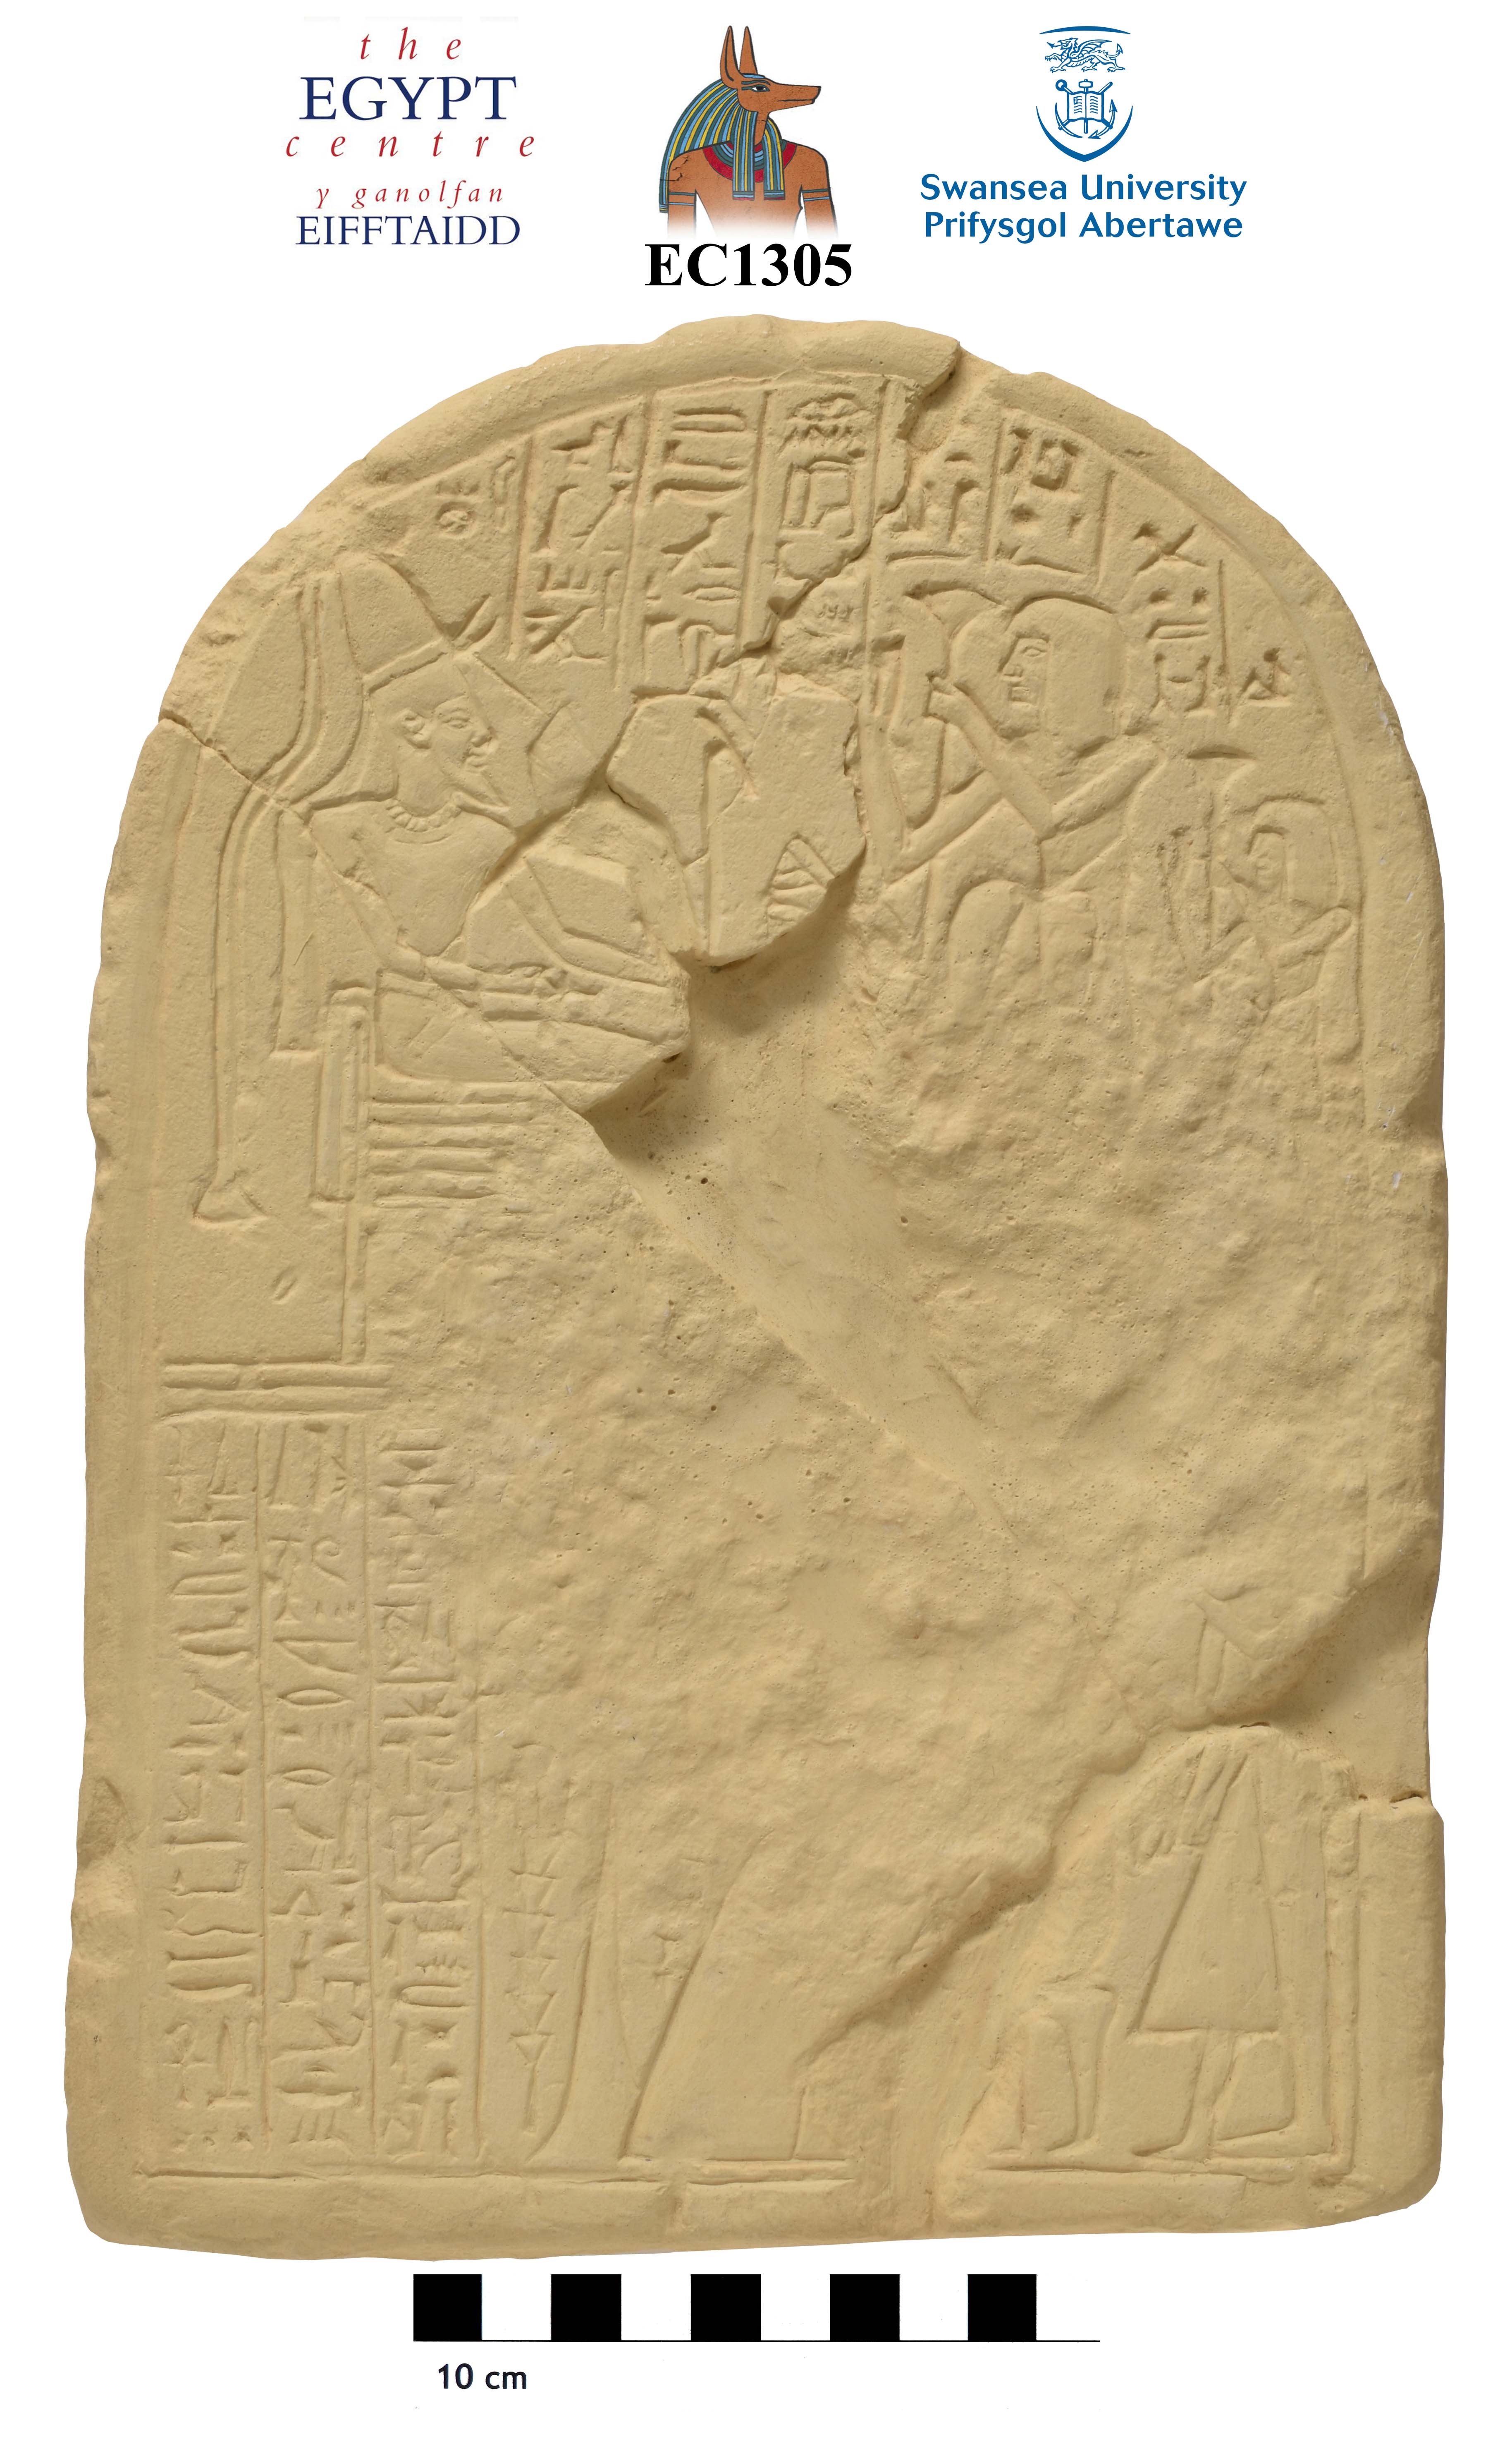 Image for: Plaster cast of a stela